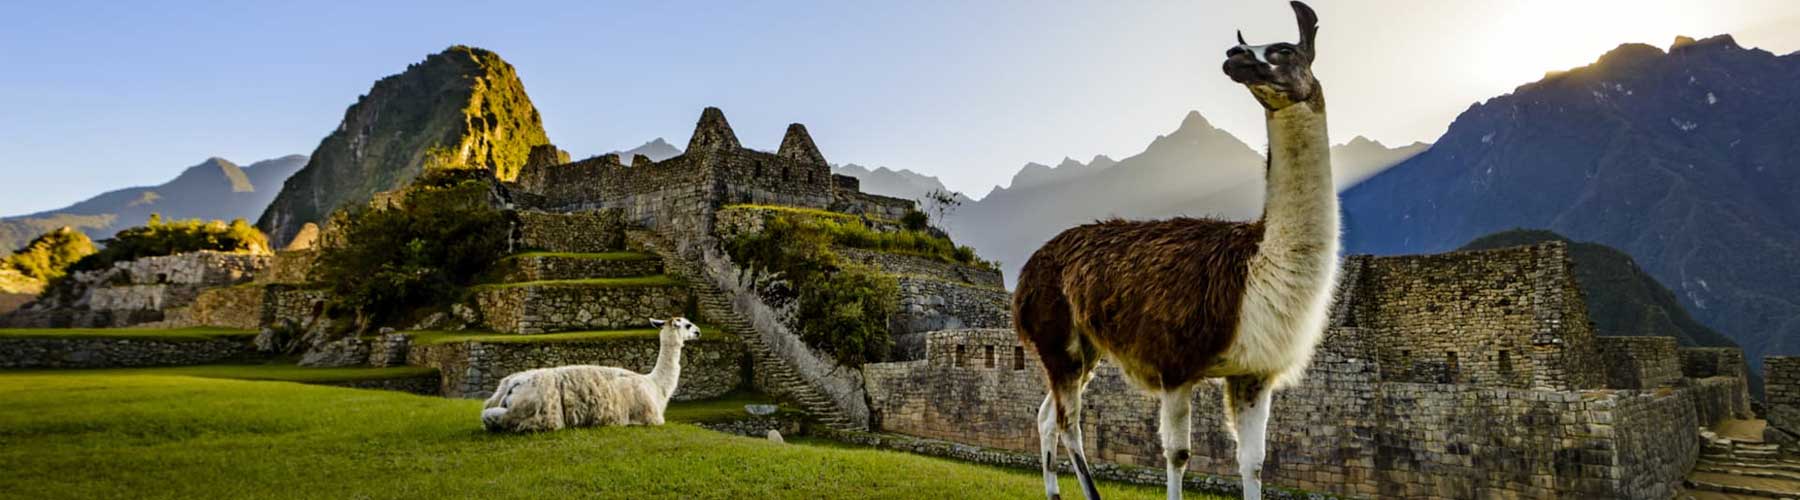 Machu Picchu is the main attraction of Peru